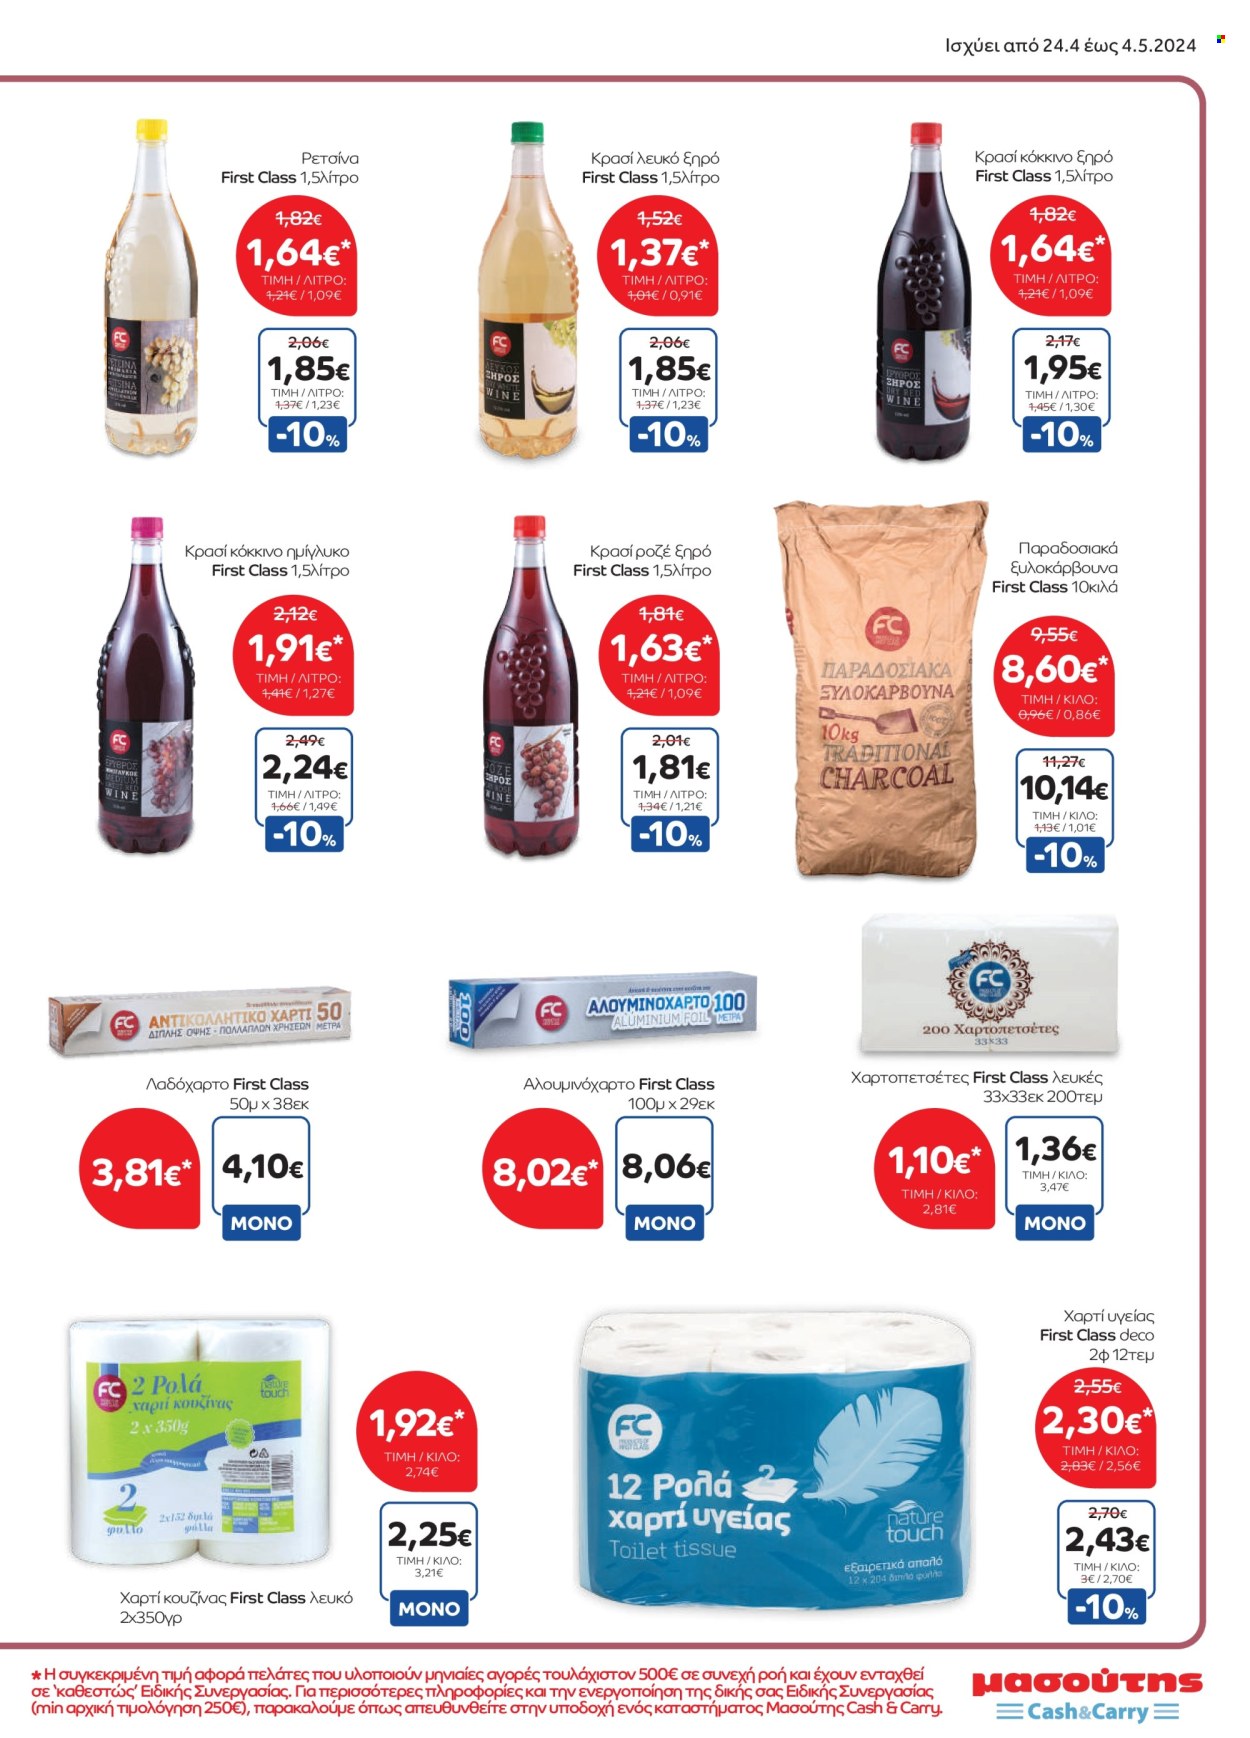 thumbnail - Φυλλάδια Masoutis Cash & Carry - 24.04.2024 - 04.05.2024 - Εκπτωτικά προϊόντα - κρασί, χαρτί υγείας, χαρτοπετσετες, αλουμινόχαρτο. Σελίδα 7.